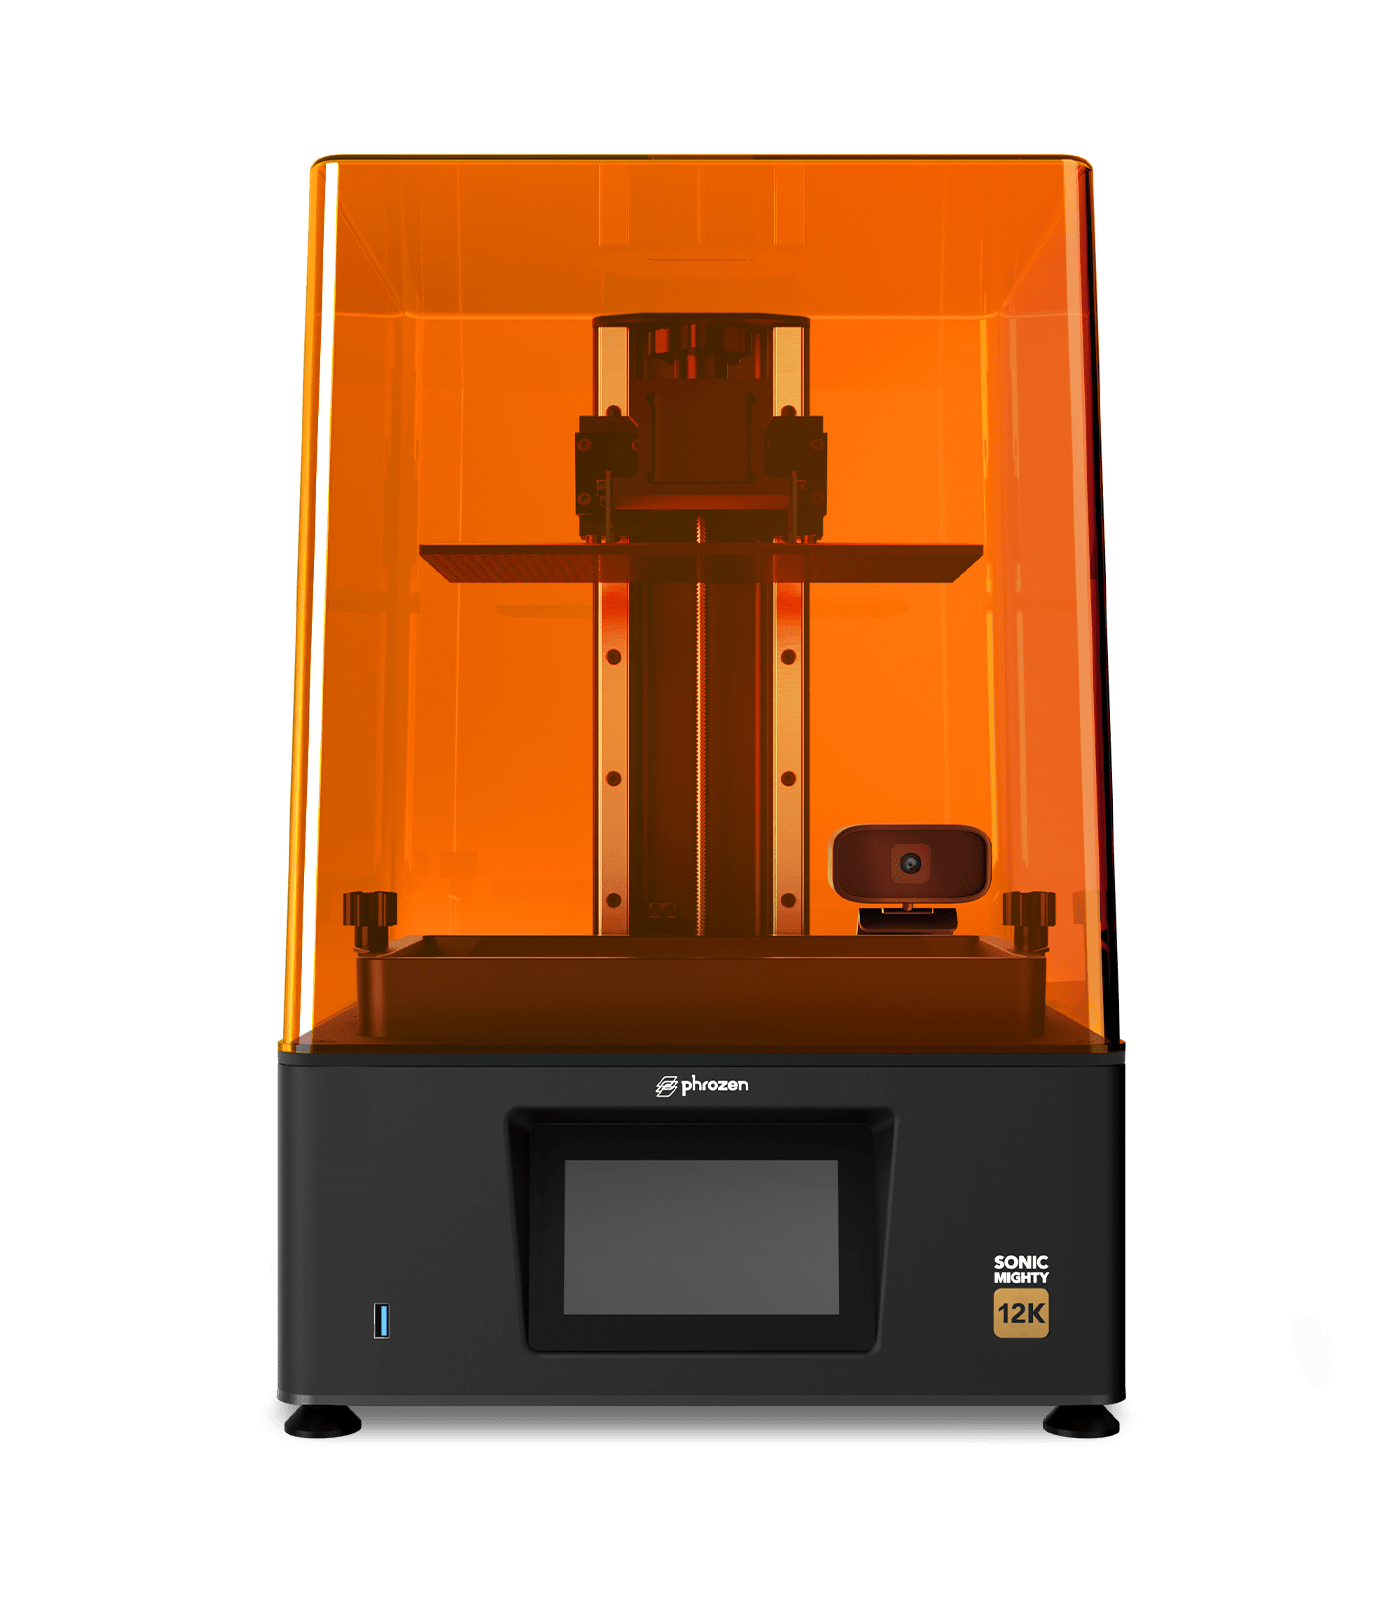 Phrozen Sonic Mighty 12K - 3D Printer